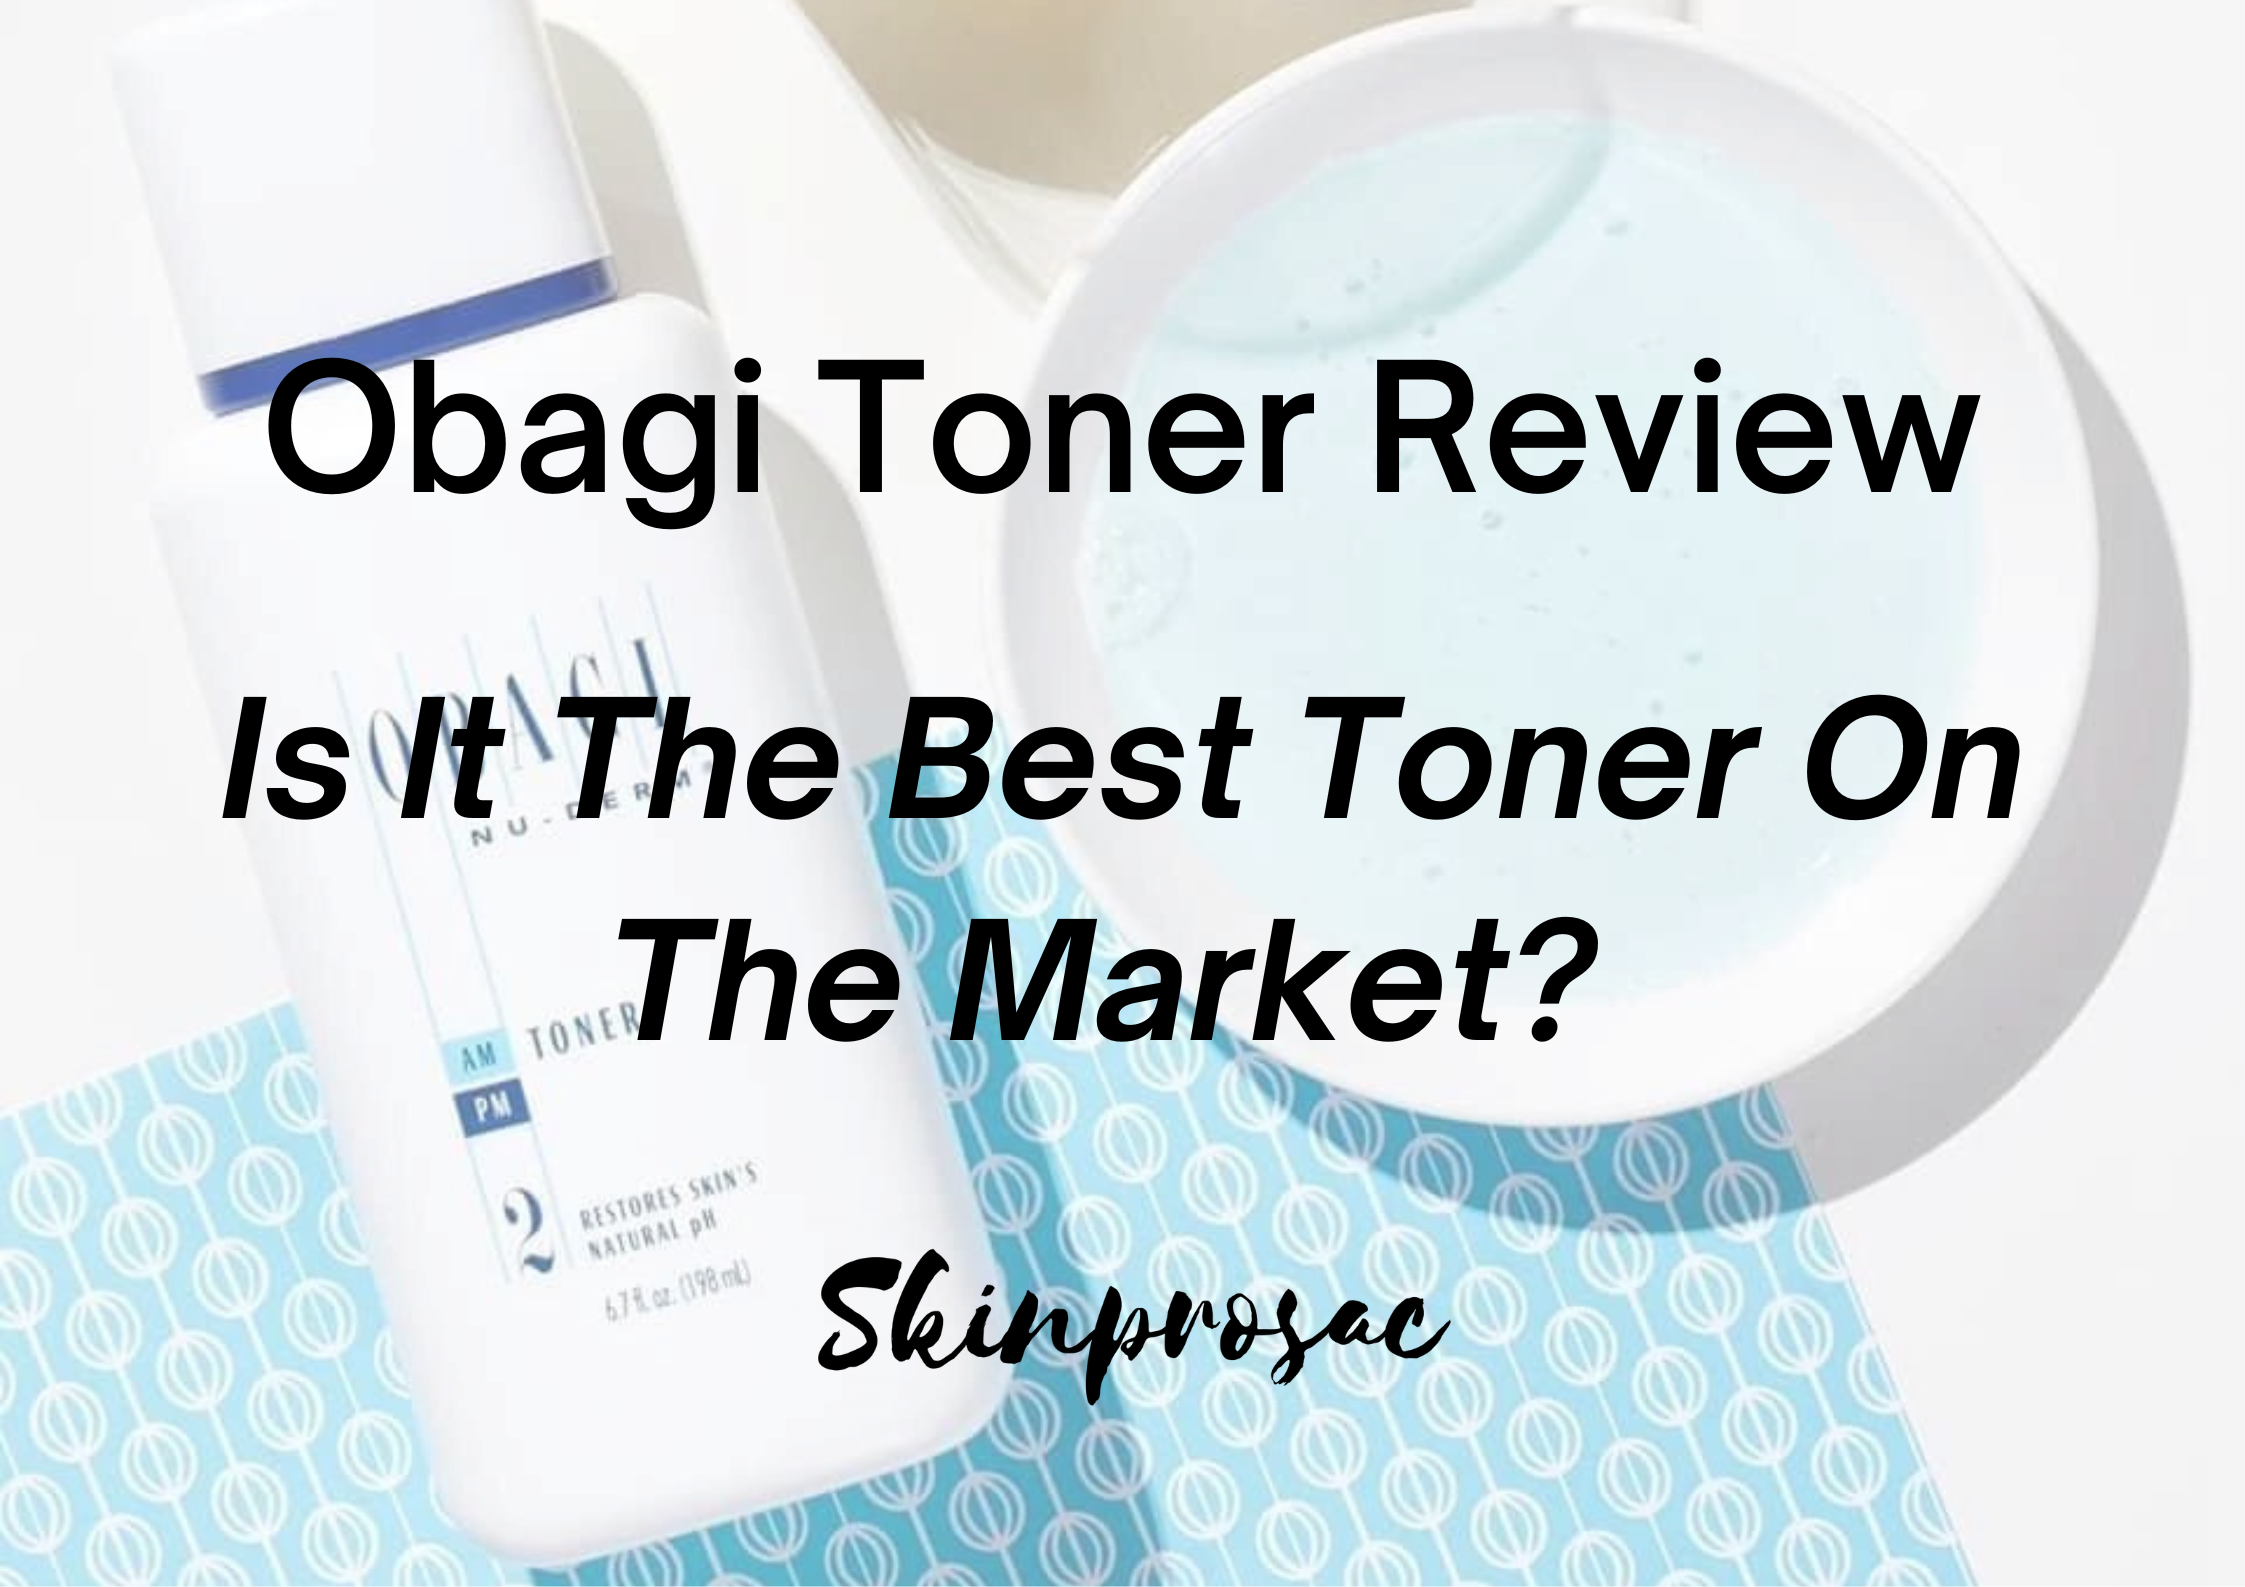 Obagi Toner Reviews | Really the Best Toner on the Market?